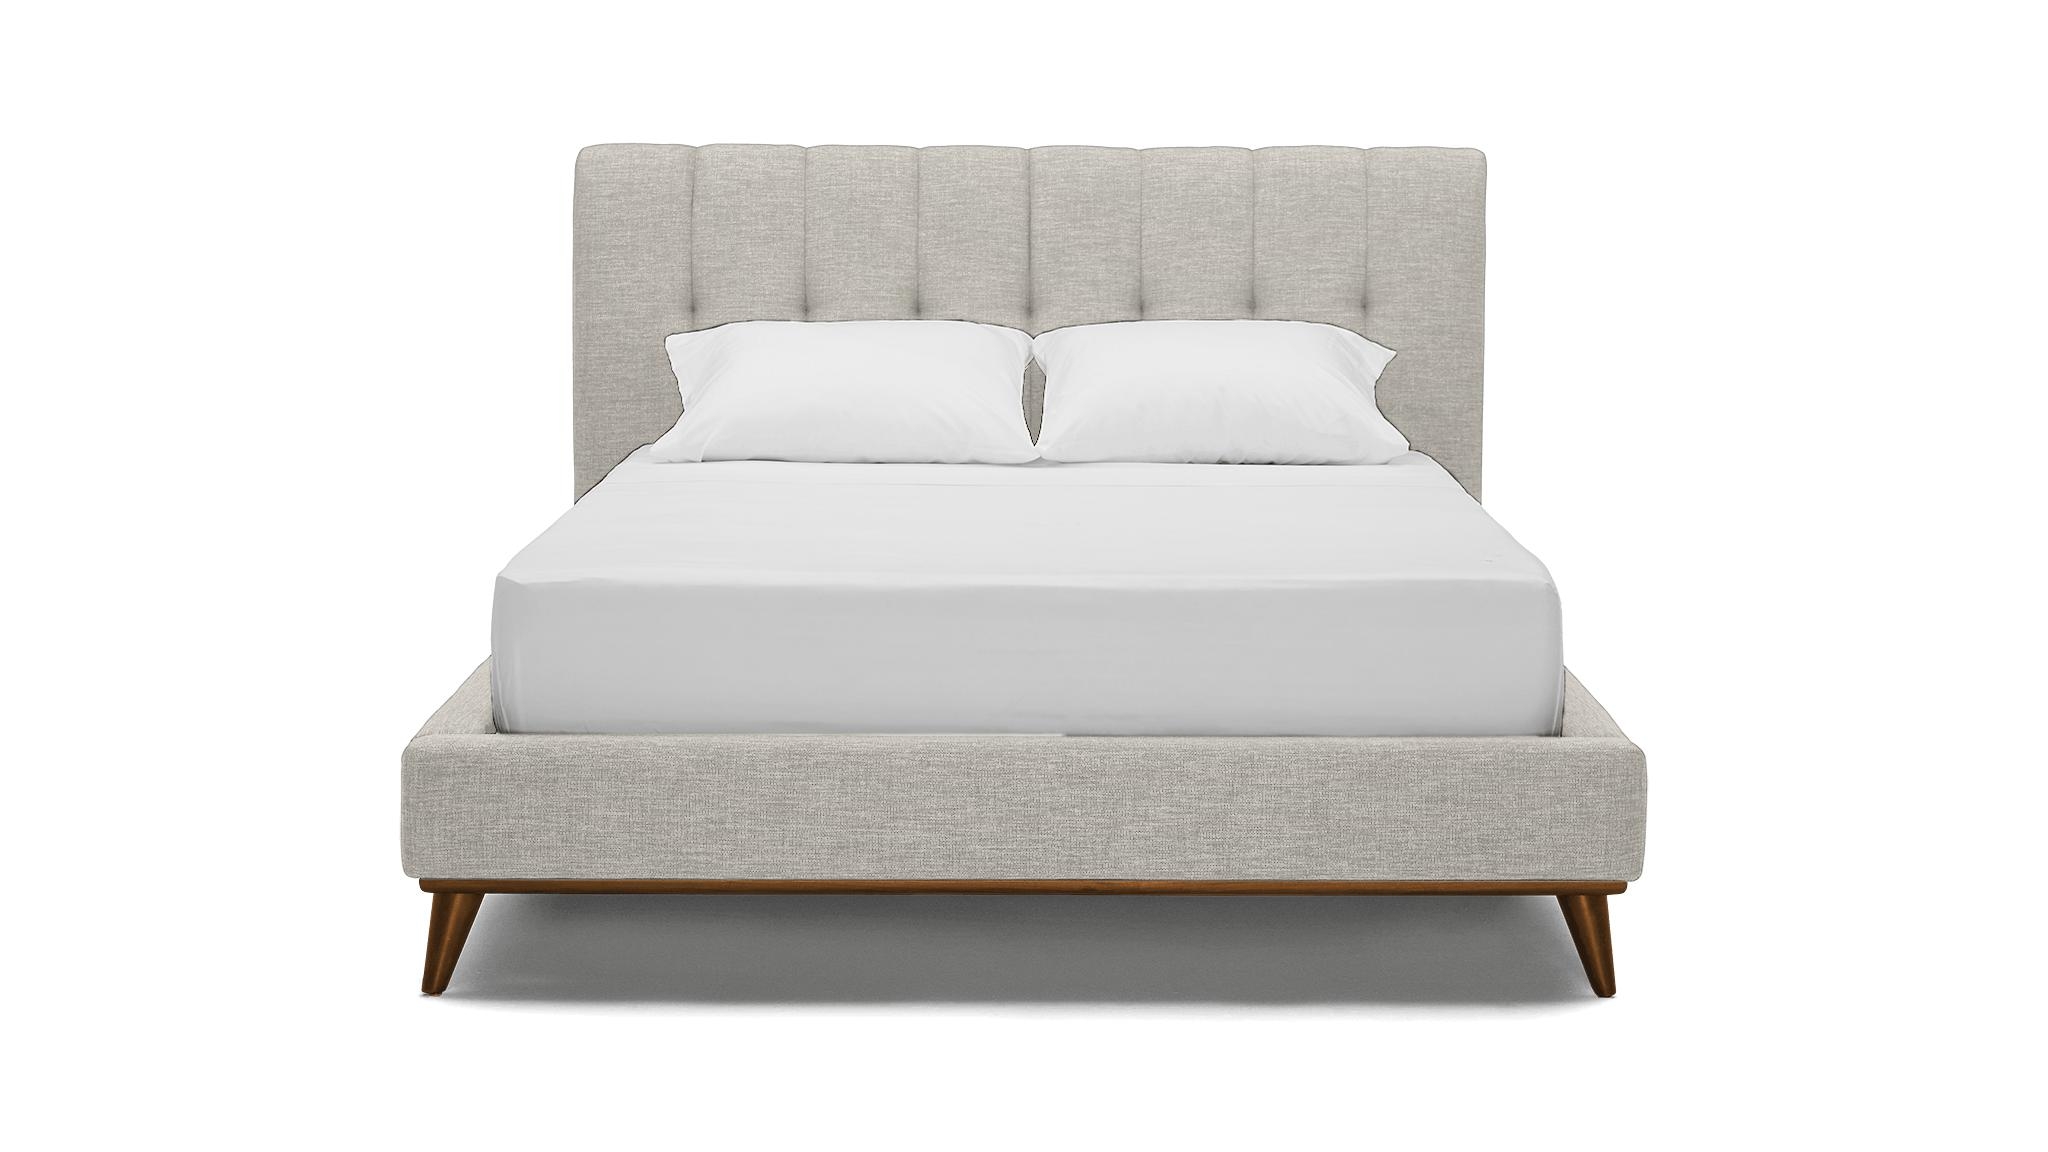 Gray Hughes Mid Century Modern Bed - Bloke Cotton - Mocha - Cal King - Image 0